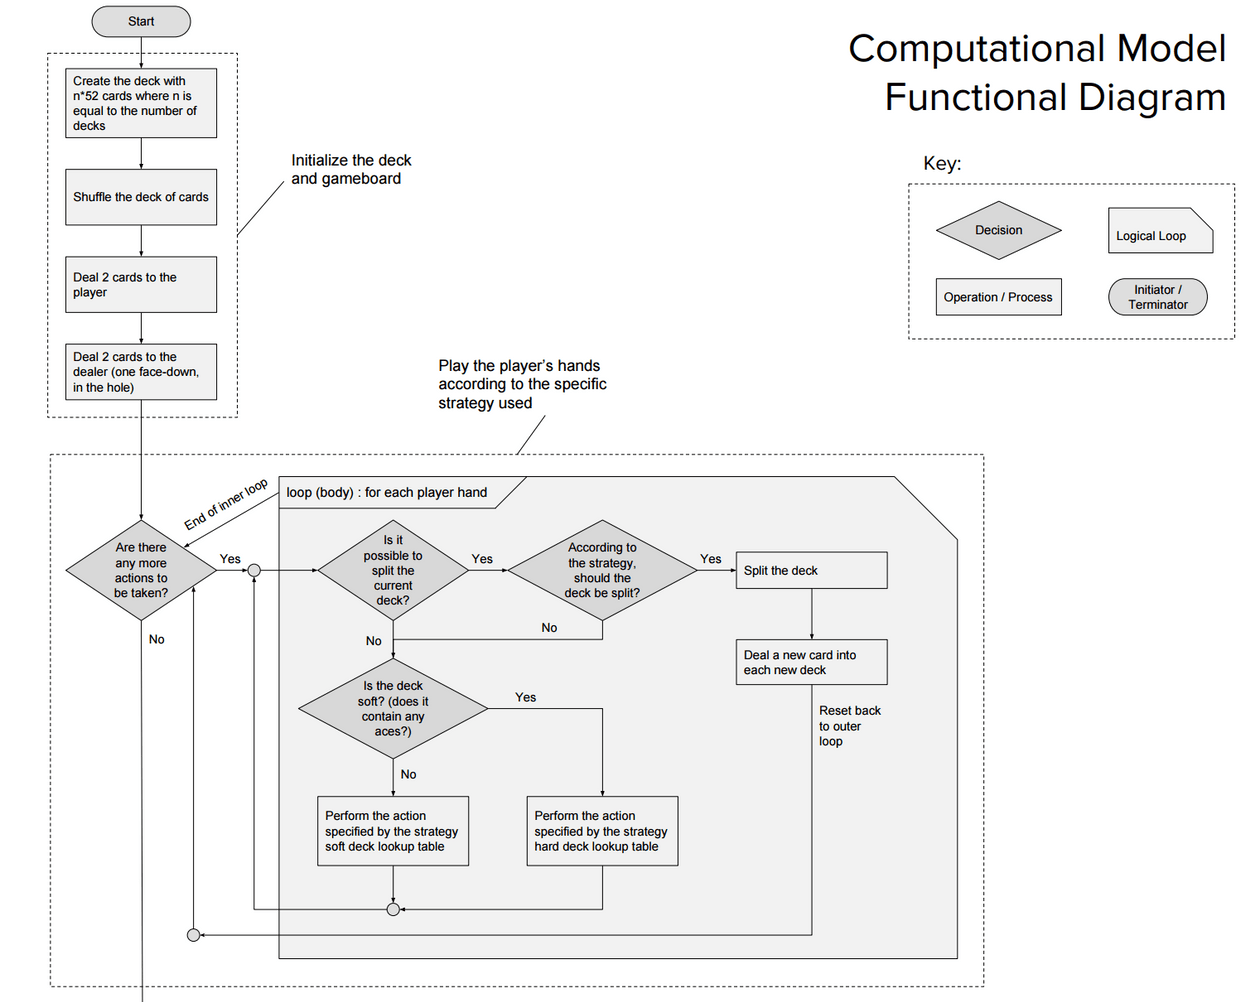 Functional Diagram Part 1